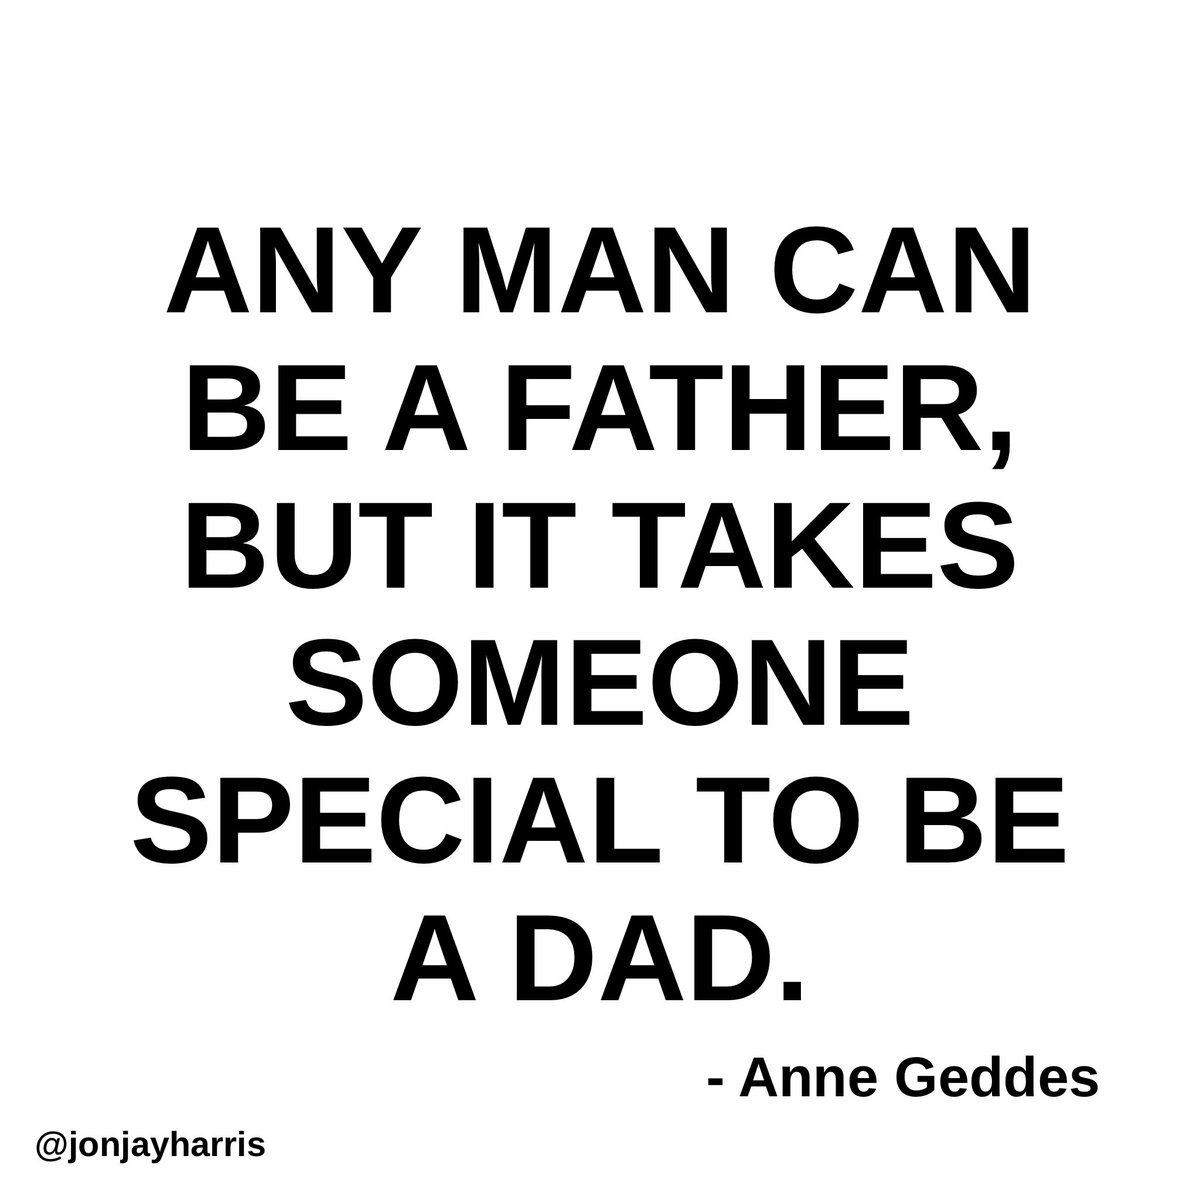 Happy Fathers Day!
#harrismint #wordstoliveby #share #wordsofwisdom #inspirationalquotes #grateful #gratitude